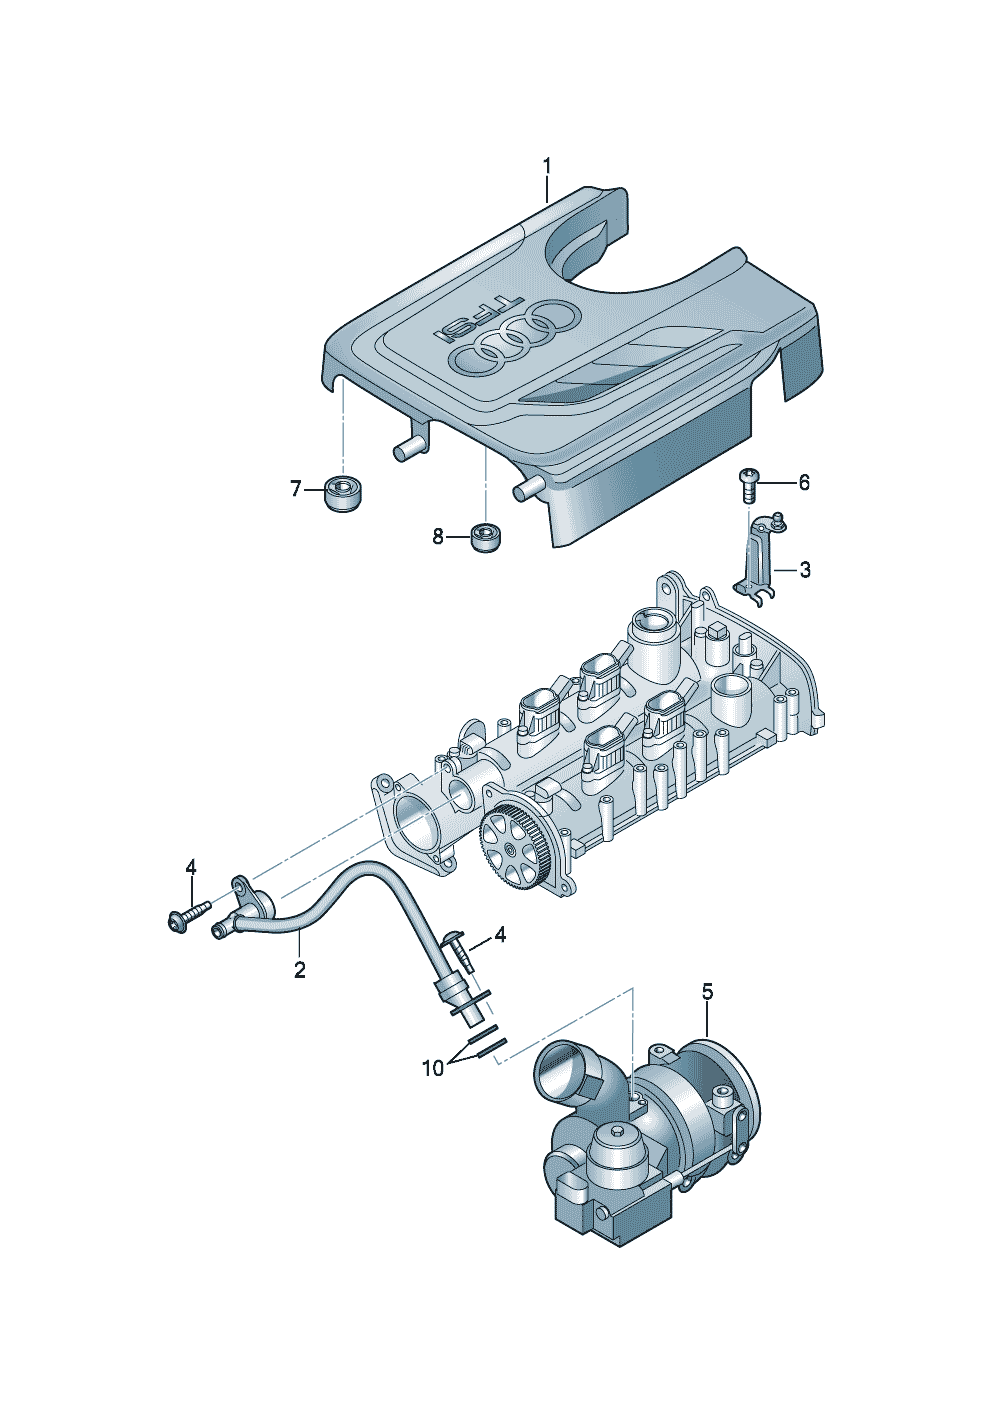 cover for engine compartmentVentilation for cylinder block 1.4ltr. - Audi Q3/Sportback - aq3